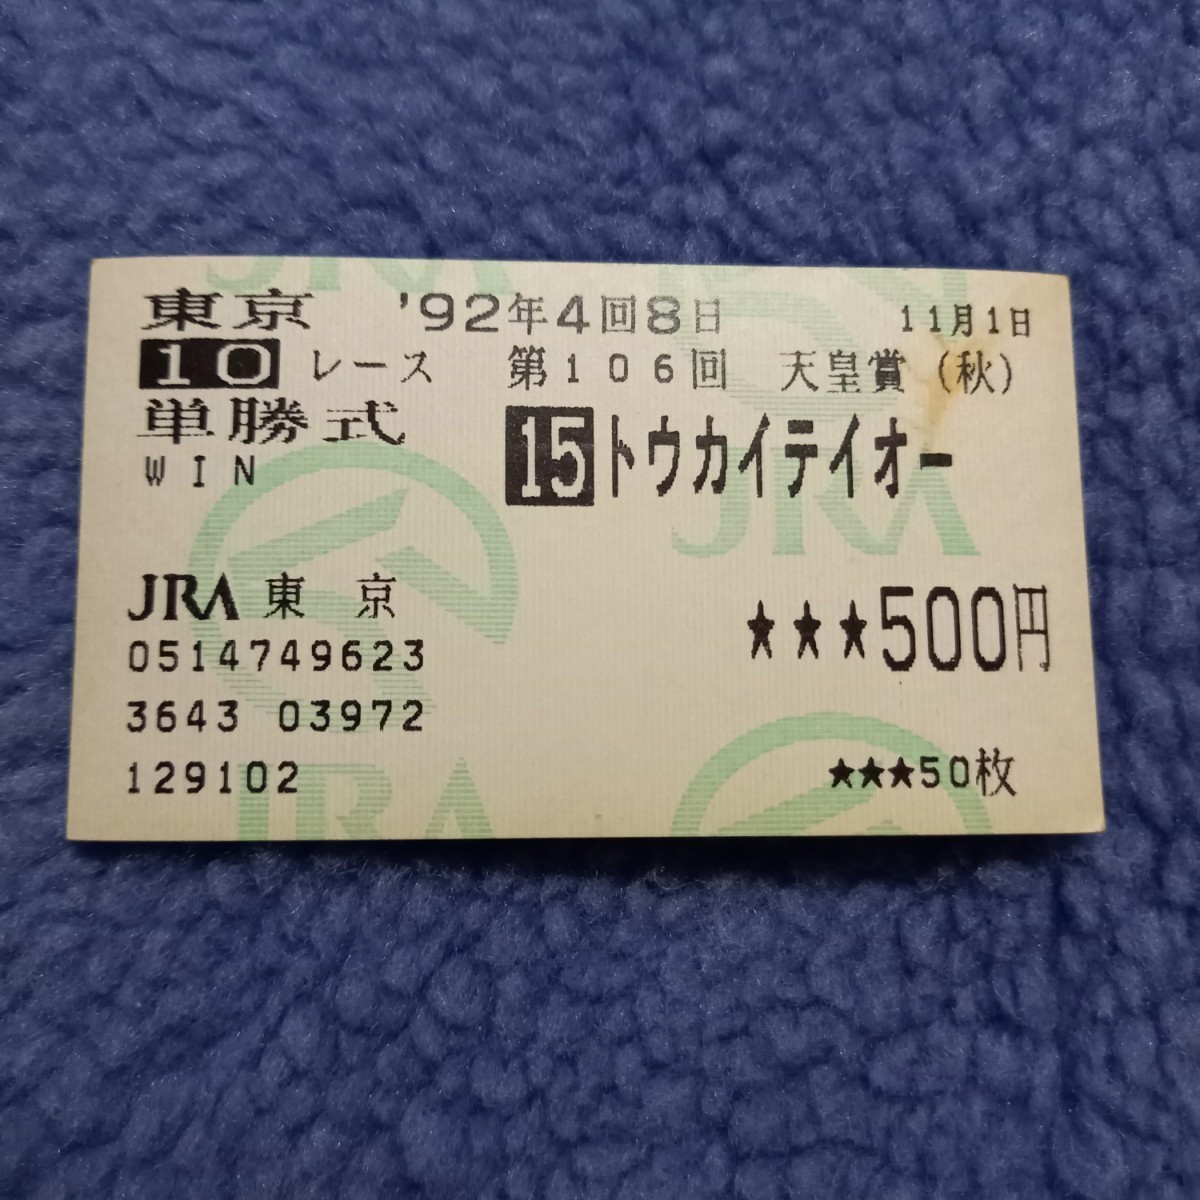 JRA単勝馬券【アメリカンボス 東京競馬3回8日11レース】2000年6月11日-